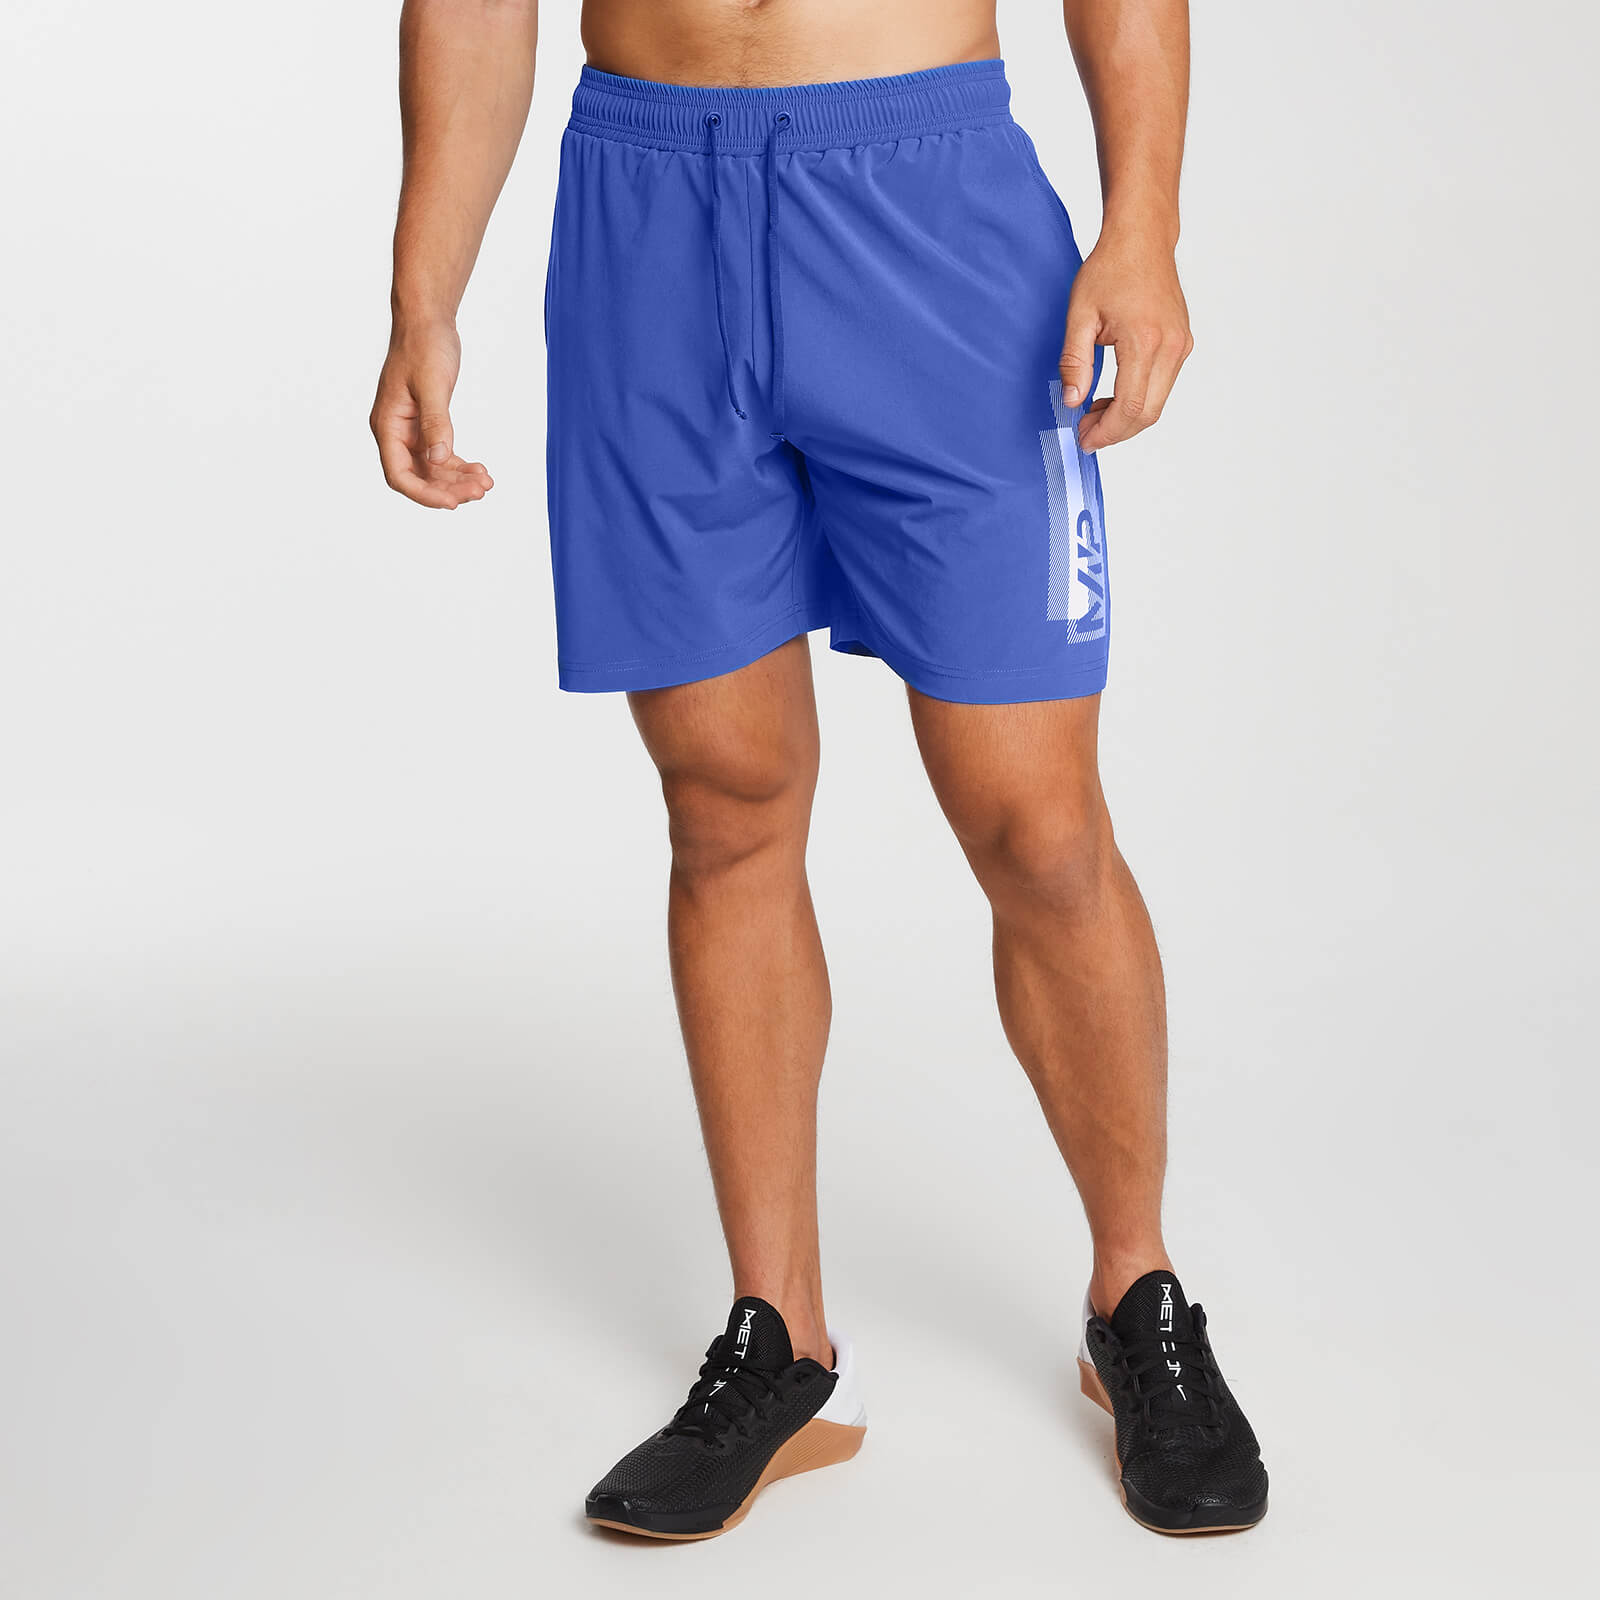 Pantaloncini sportivi stampati da uomo - Cobalto - M